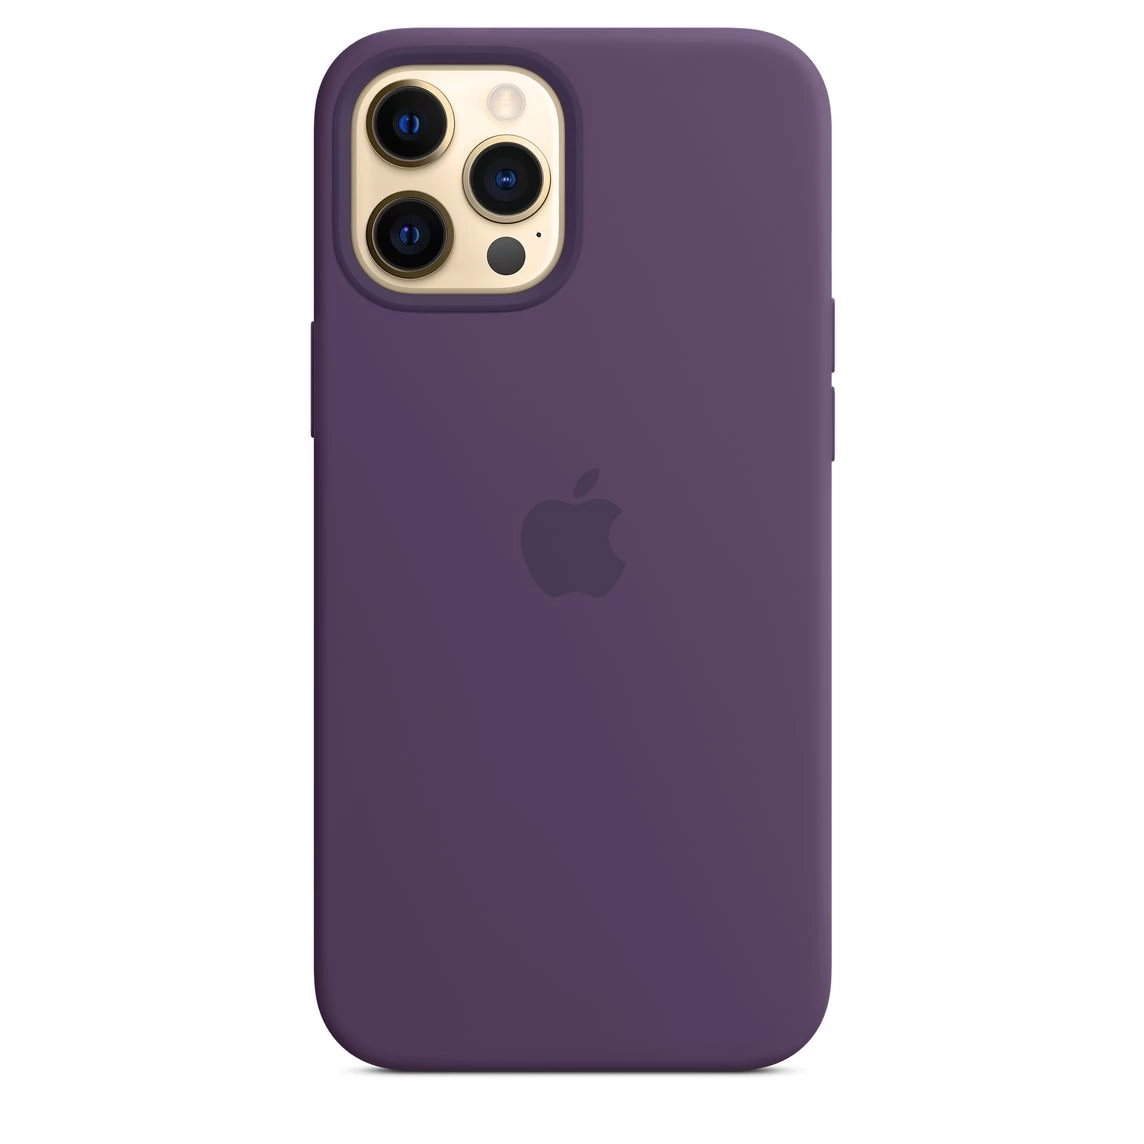 iPhone 12 Pro Max Silicone Case Lux Copy - Amethyst (MK083)